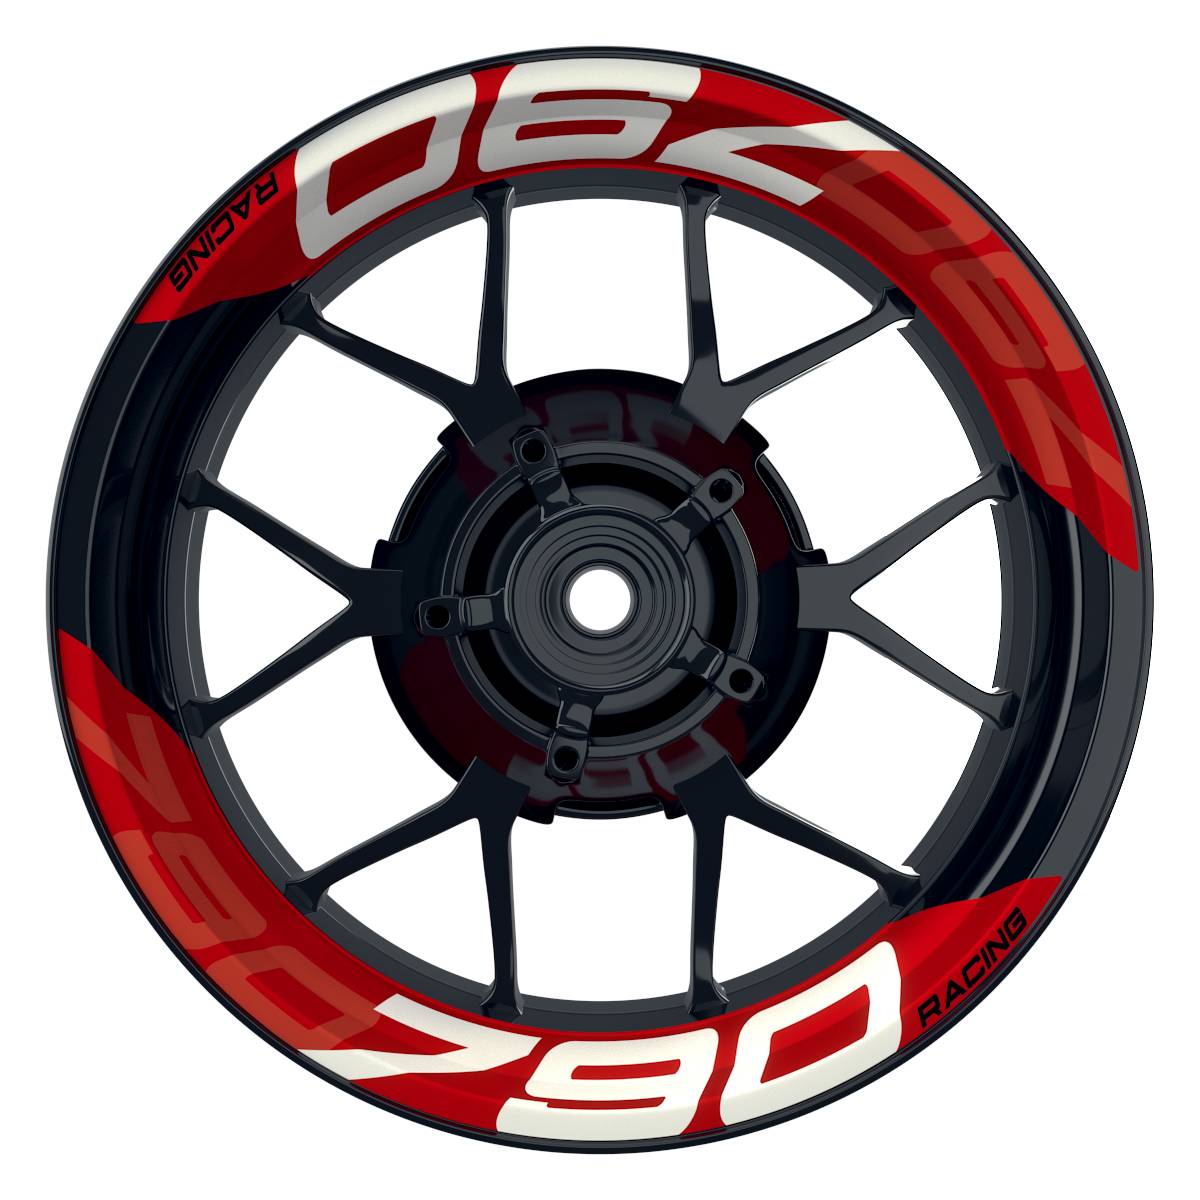 Wheelsticker Felgenaufkleber KTM Racing 790 einfarbig V2 rot Frontansicht